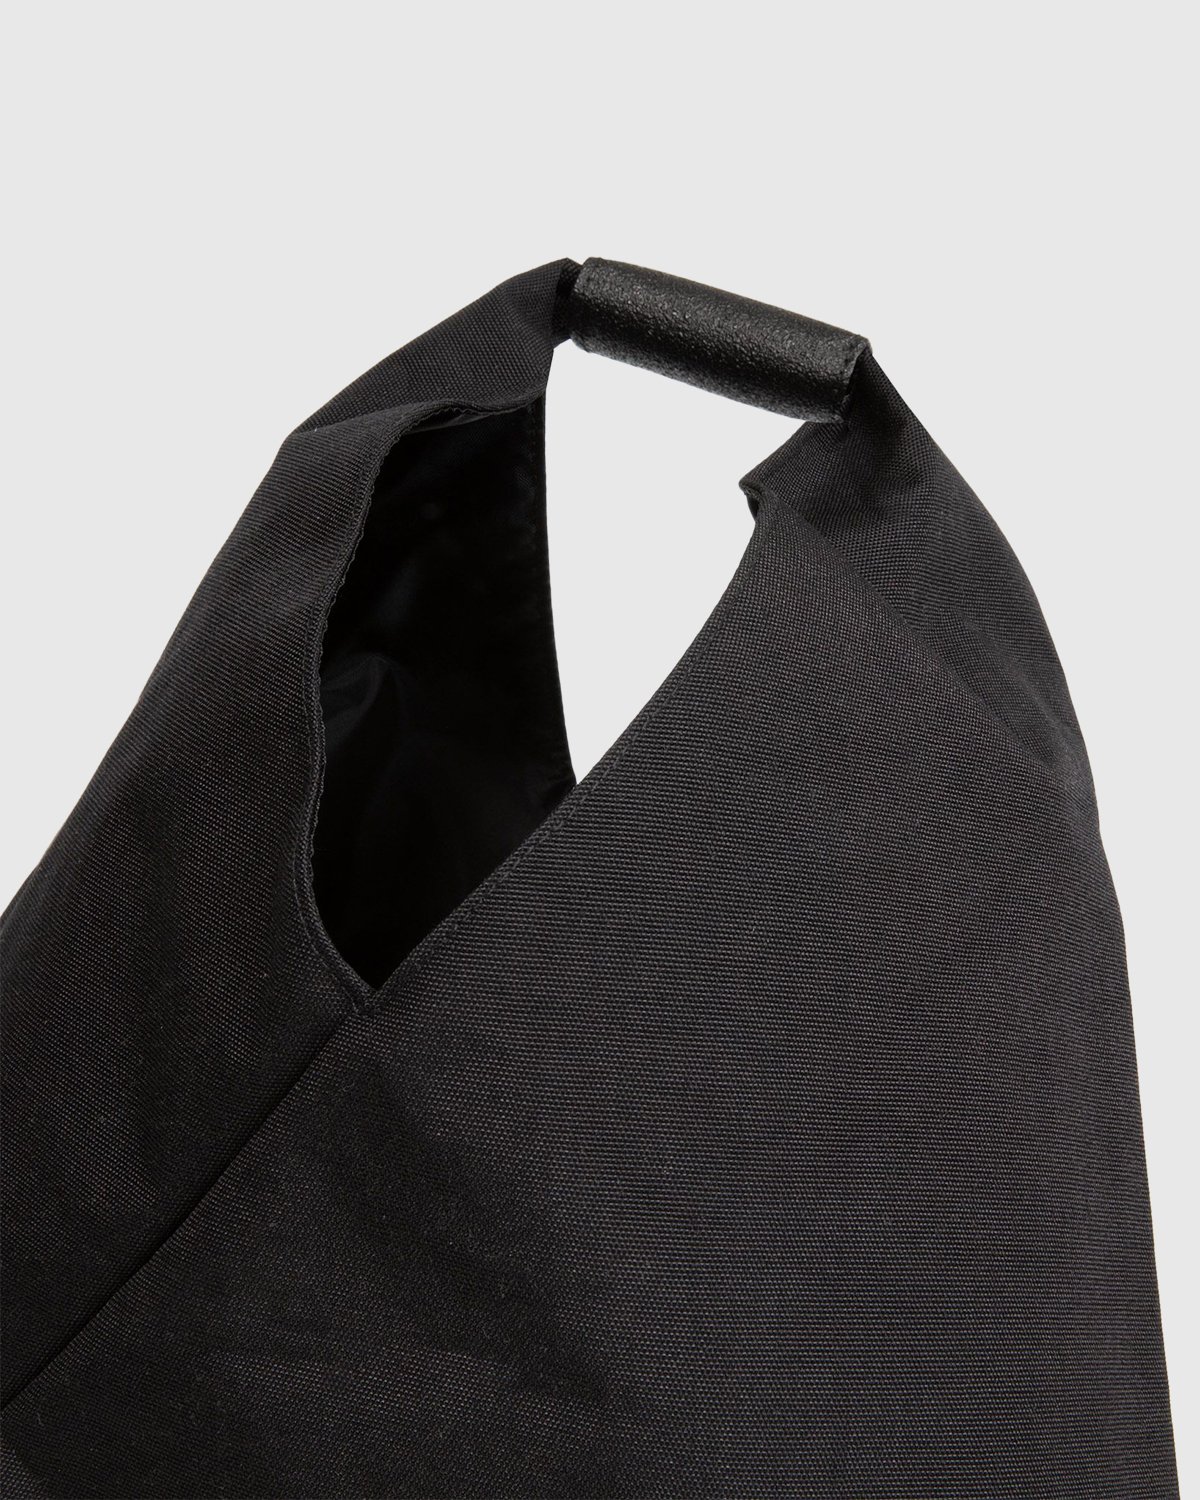 MM6 Maison Margiela x Eastpak - Shopping Bag Black - Accessories - Black - Image 3